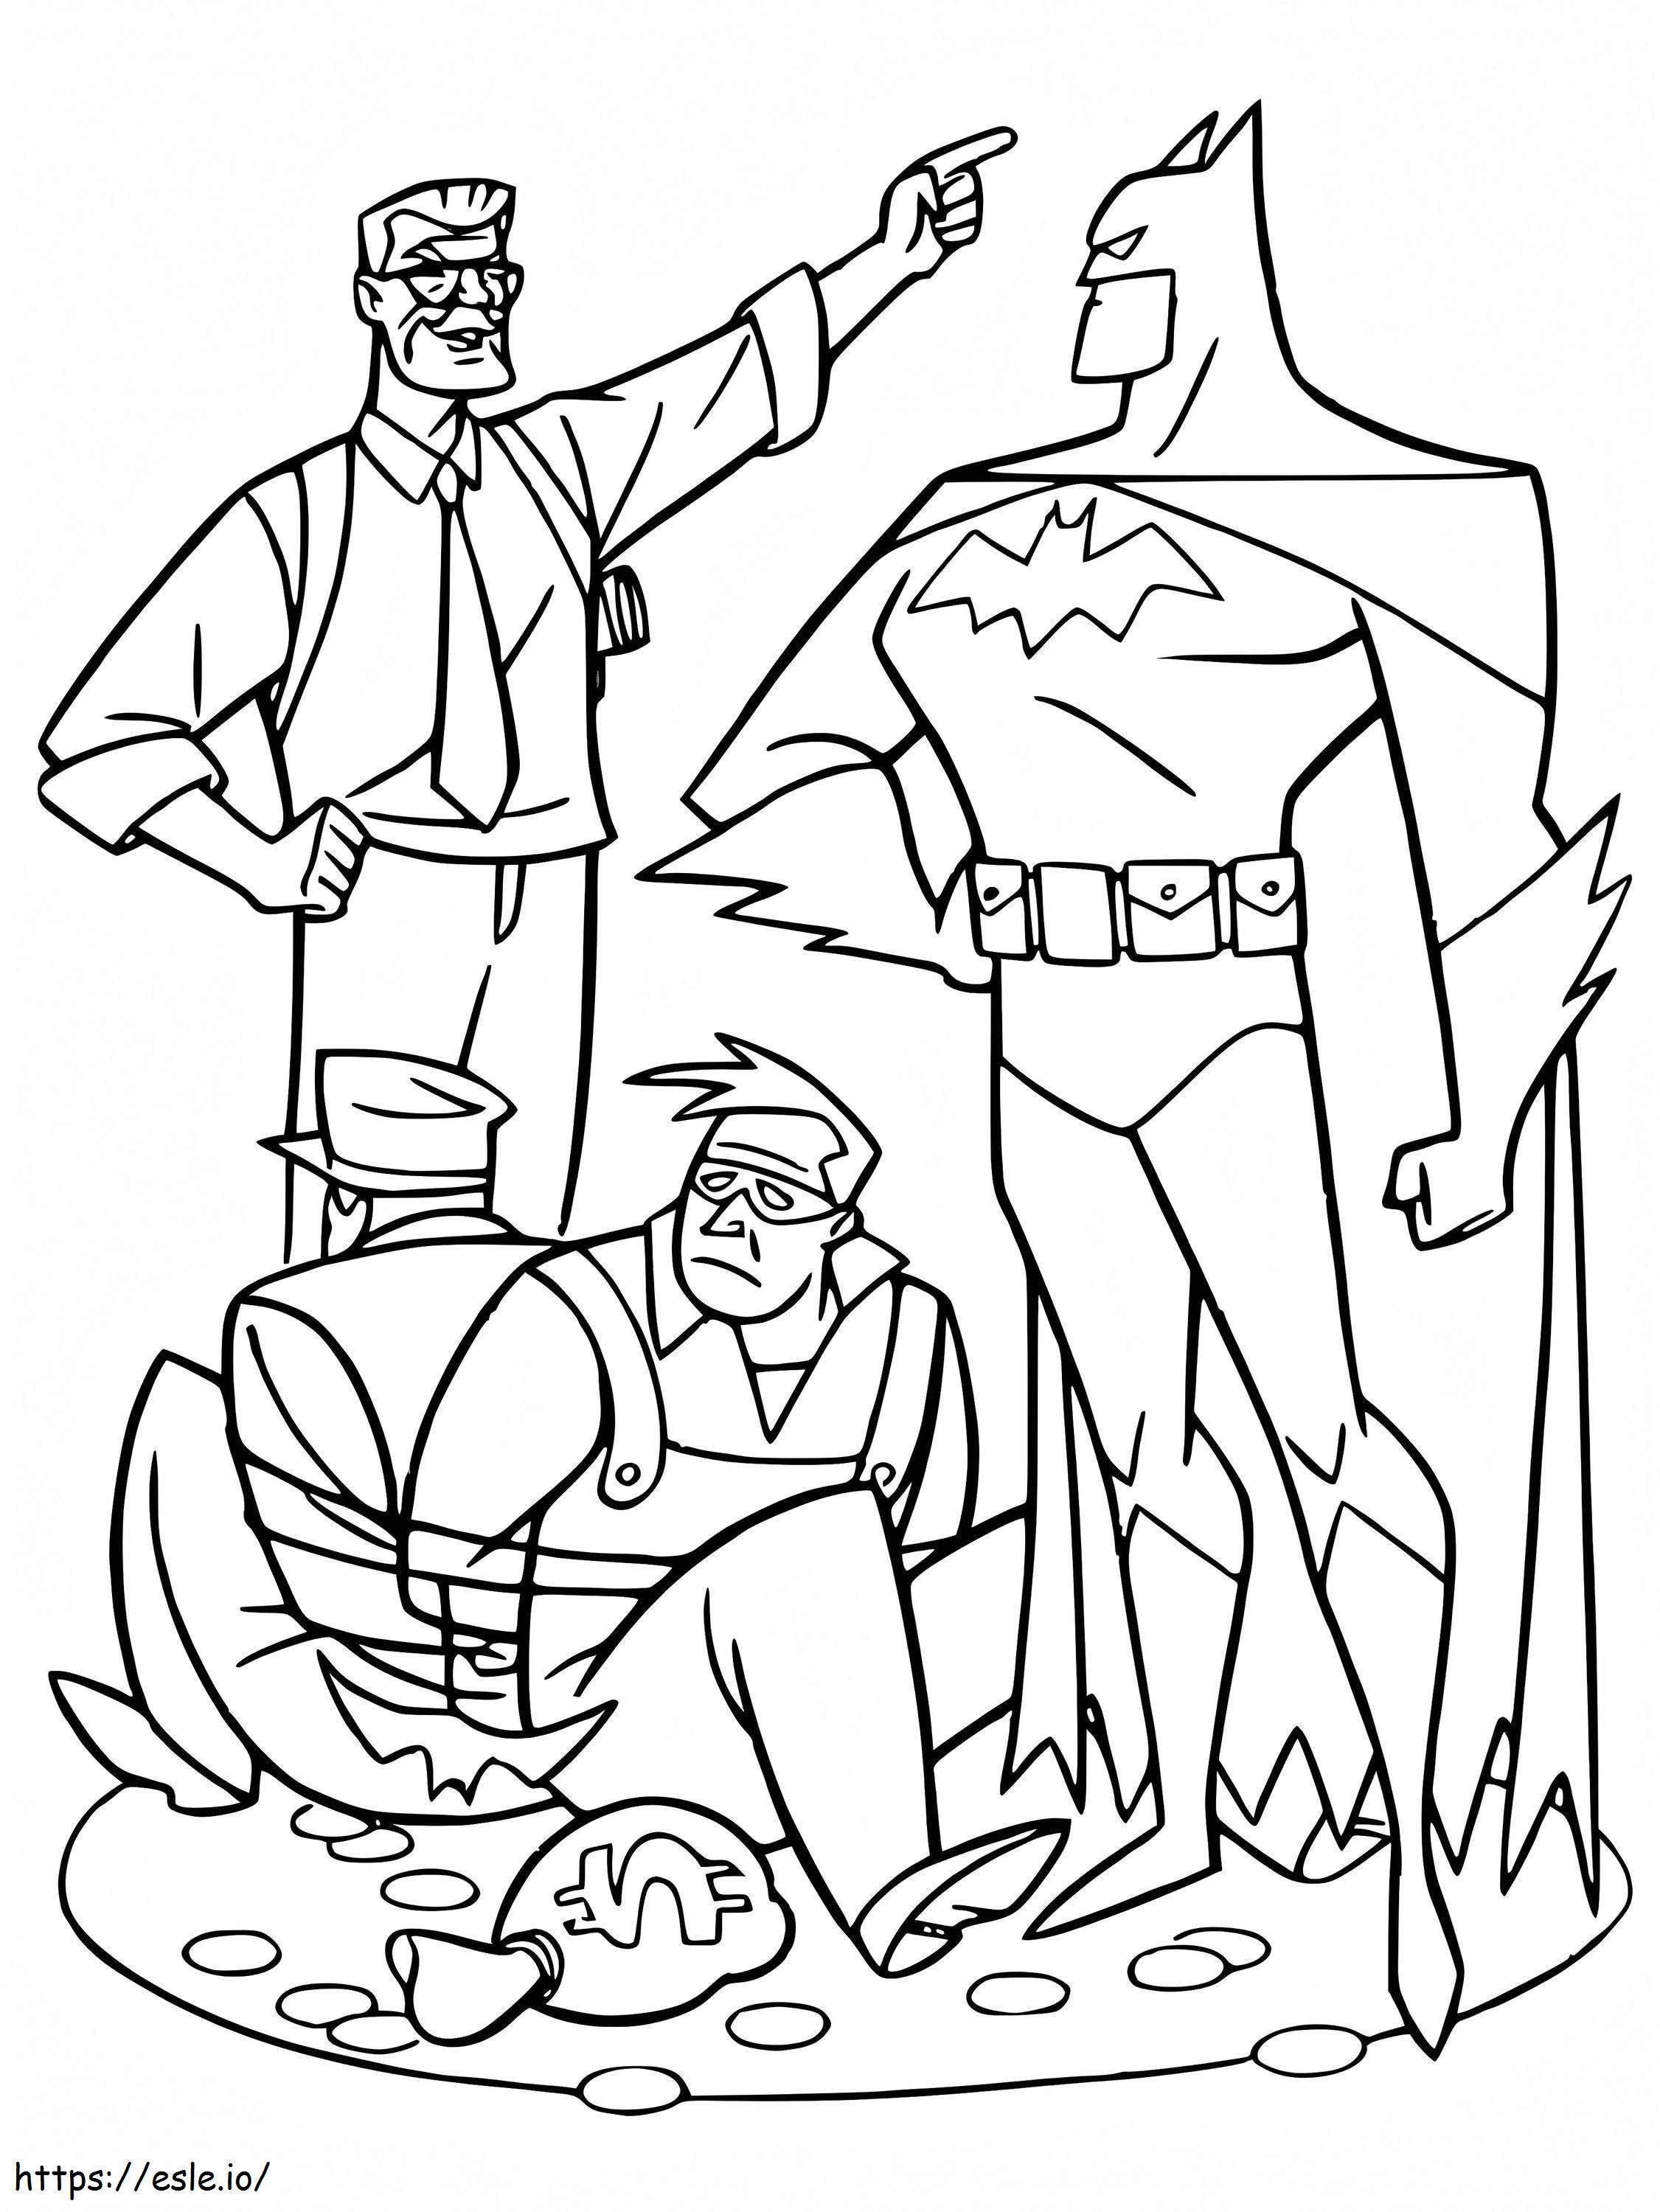 Batman With James Gordon coloring page